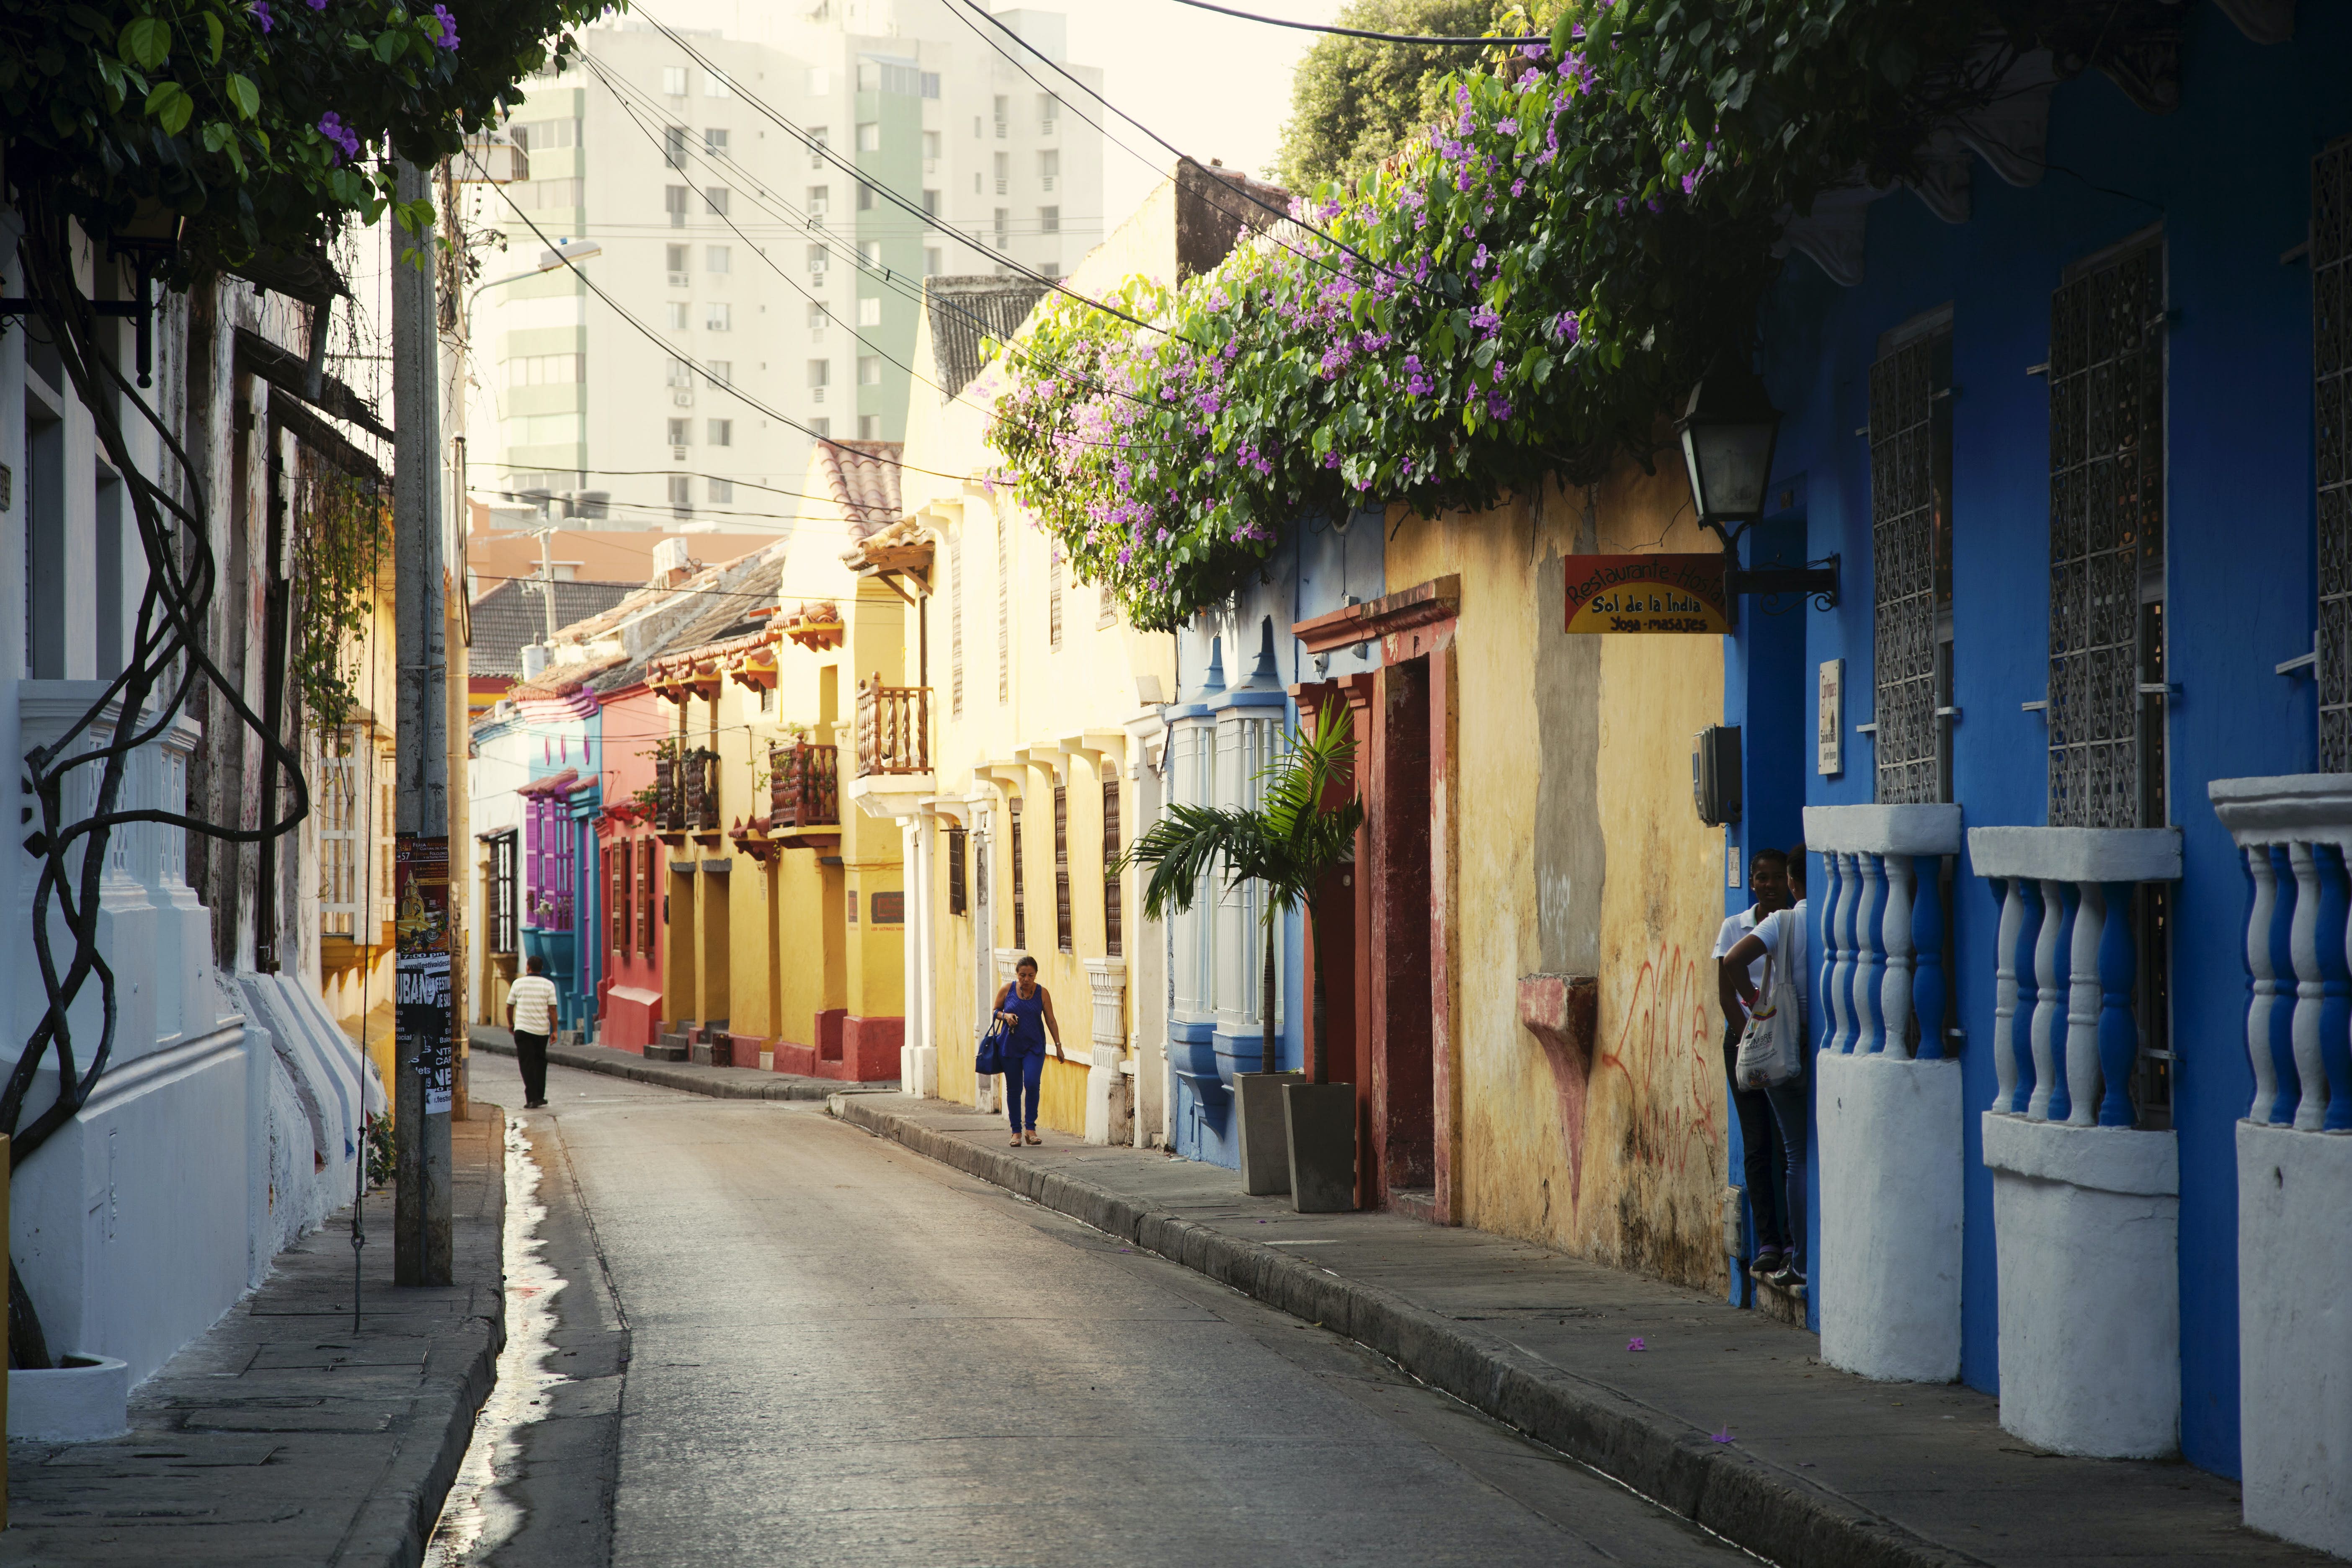 Most Instagrammable spots in Cartagena